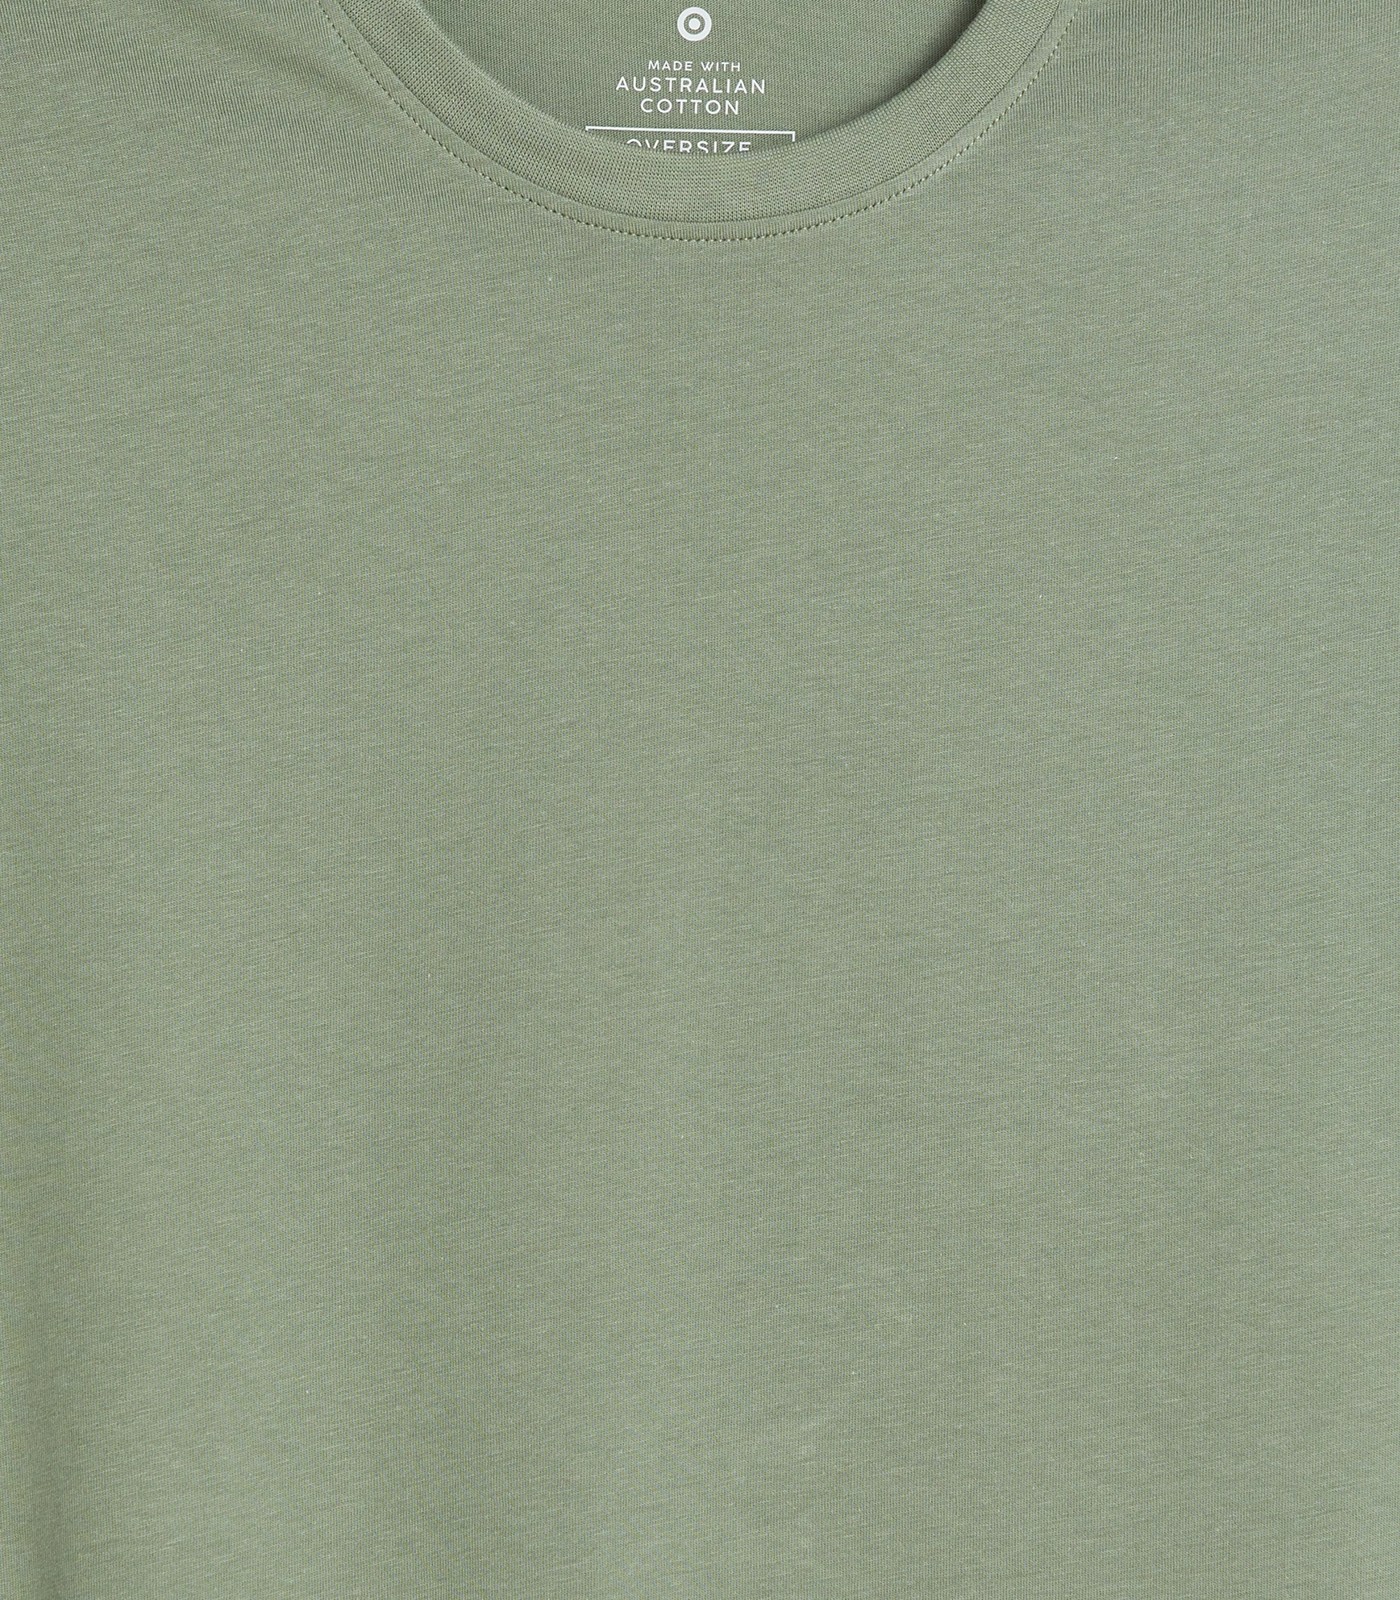 Australian Cotton Oversized T-Shirt | Target Australia